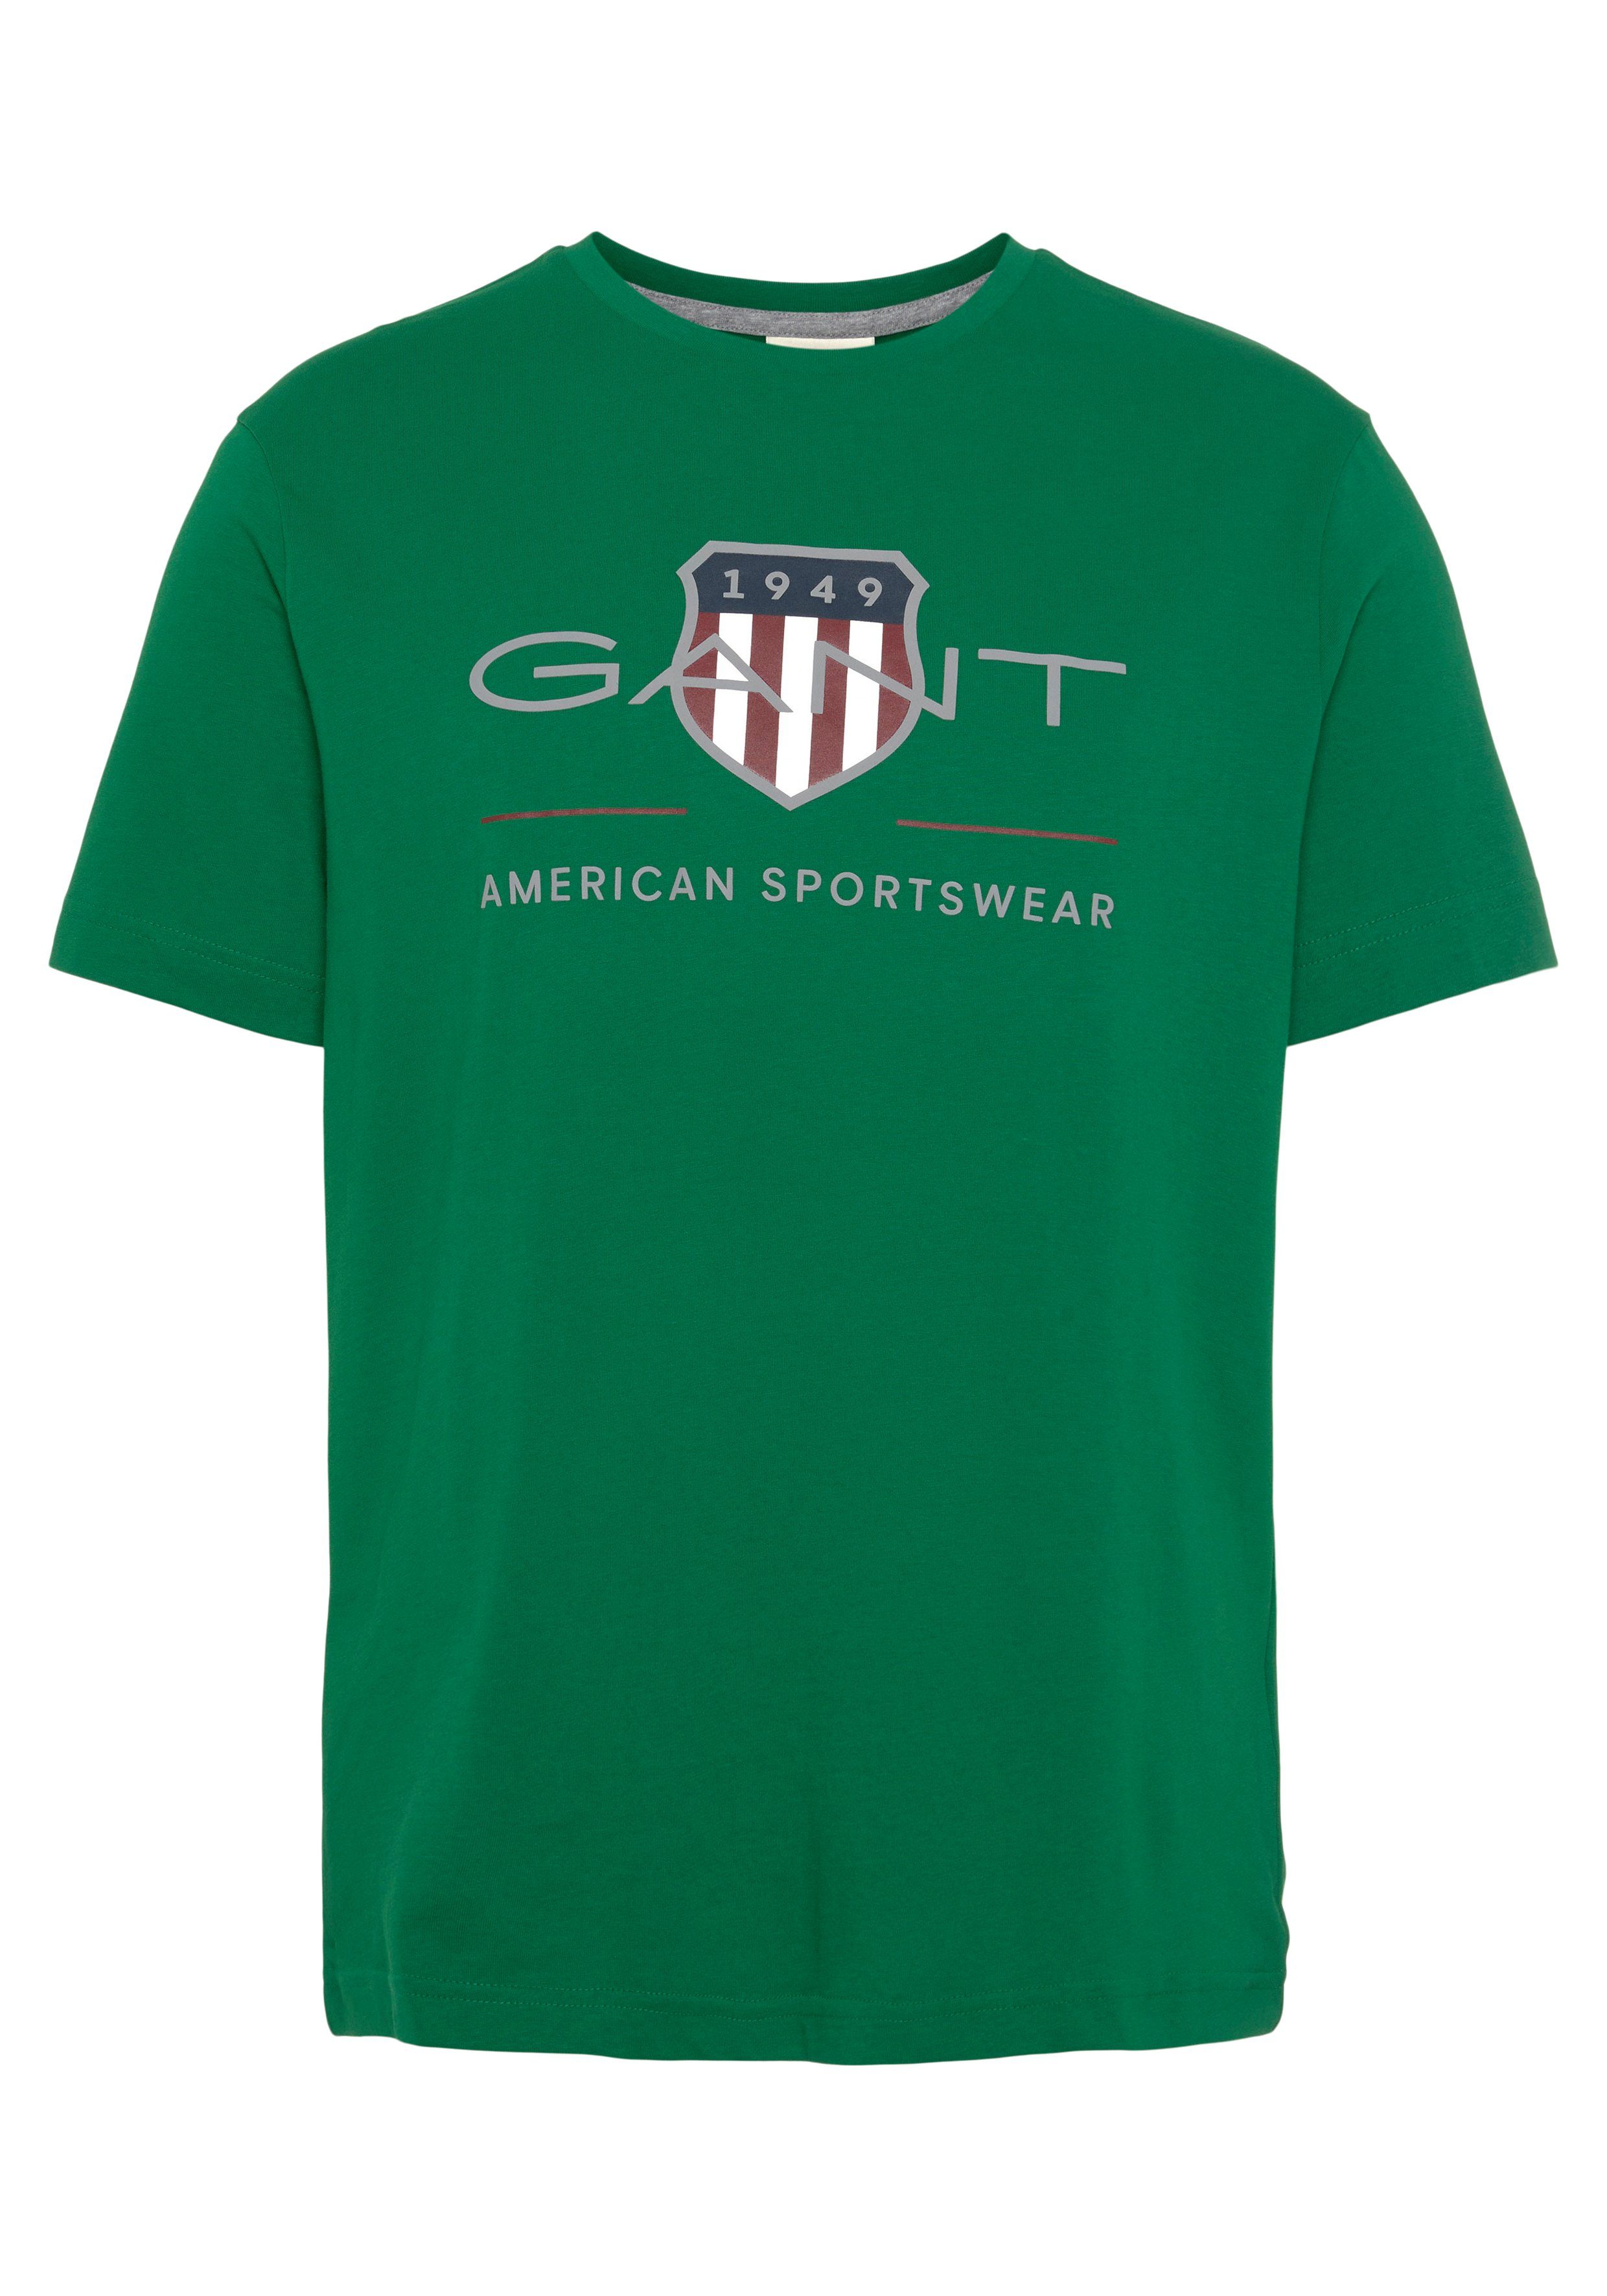 ARCHIVE Brust der T-SHIRT Logodruck GREEN REG mit auf Gant SHIELD T-Shirt LAVISH SS